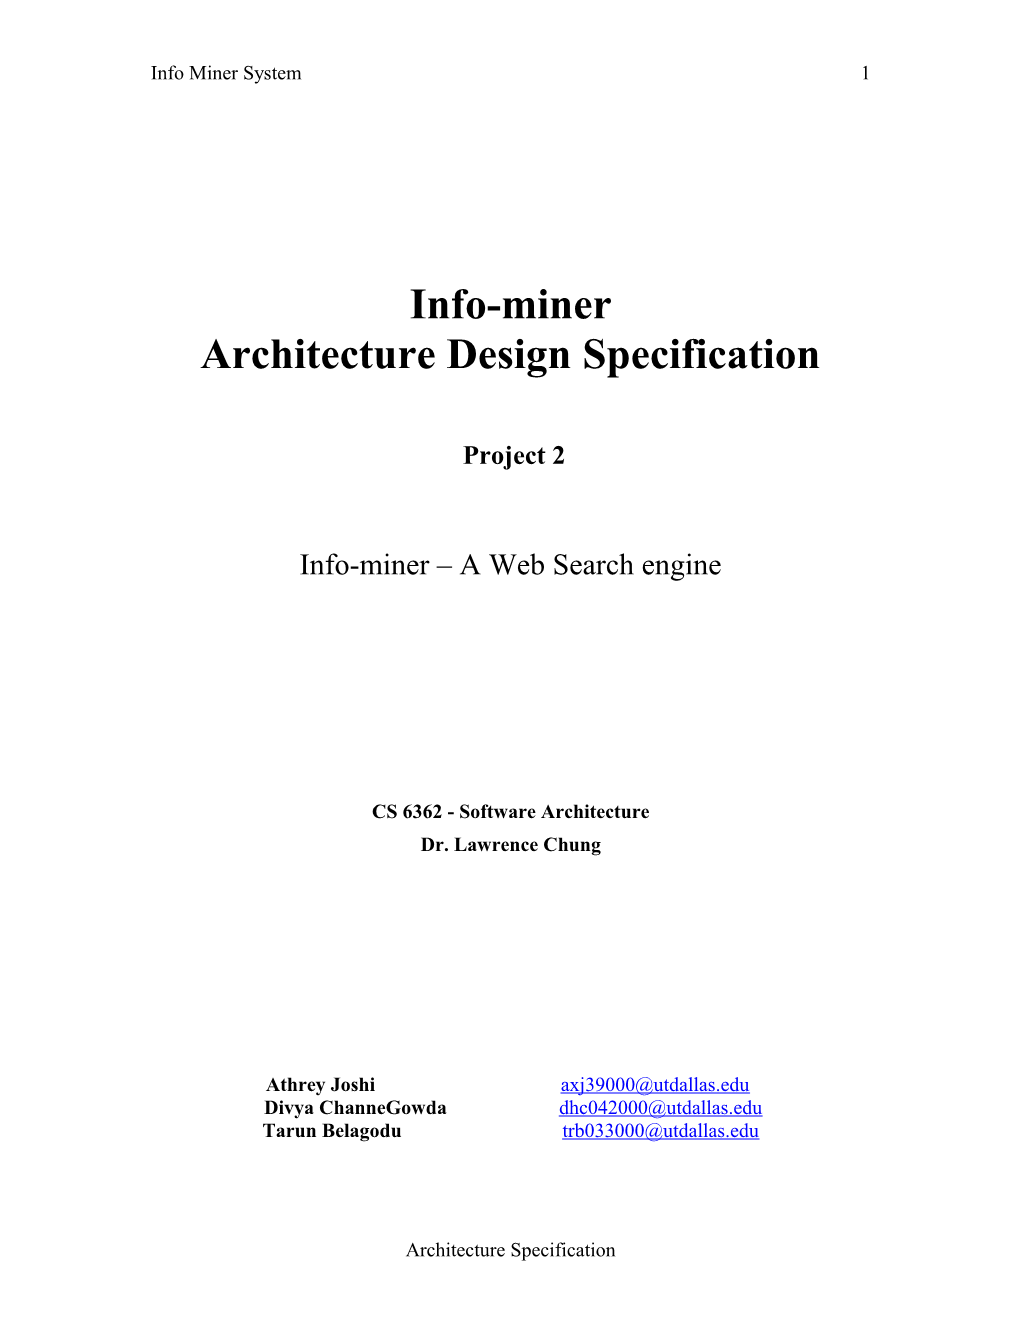 Architecture Design Specification